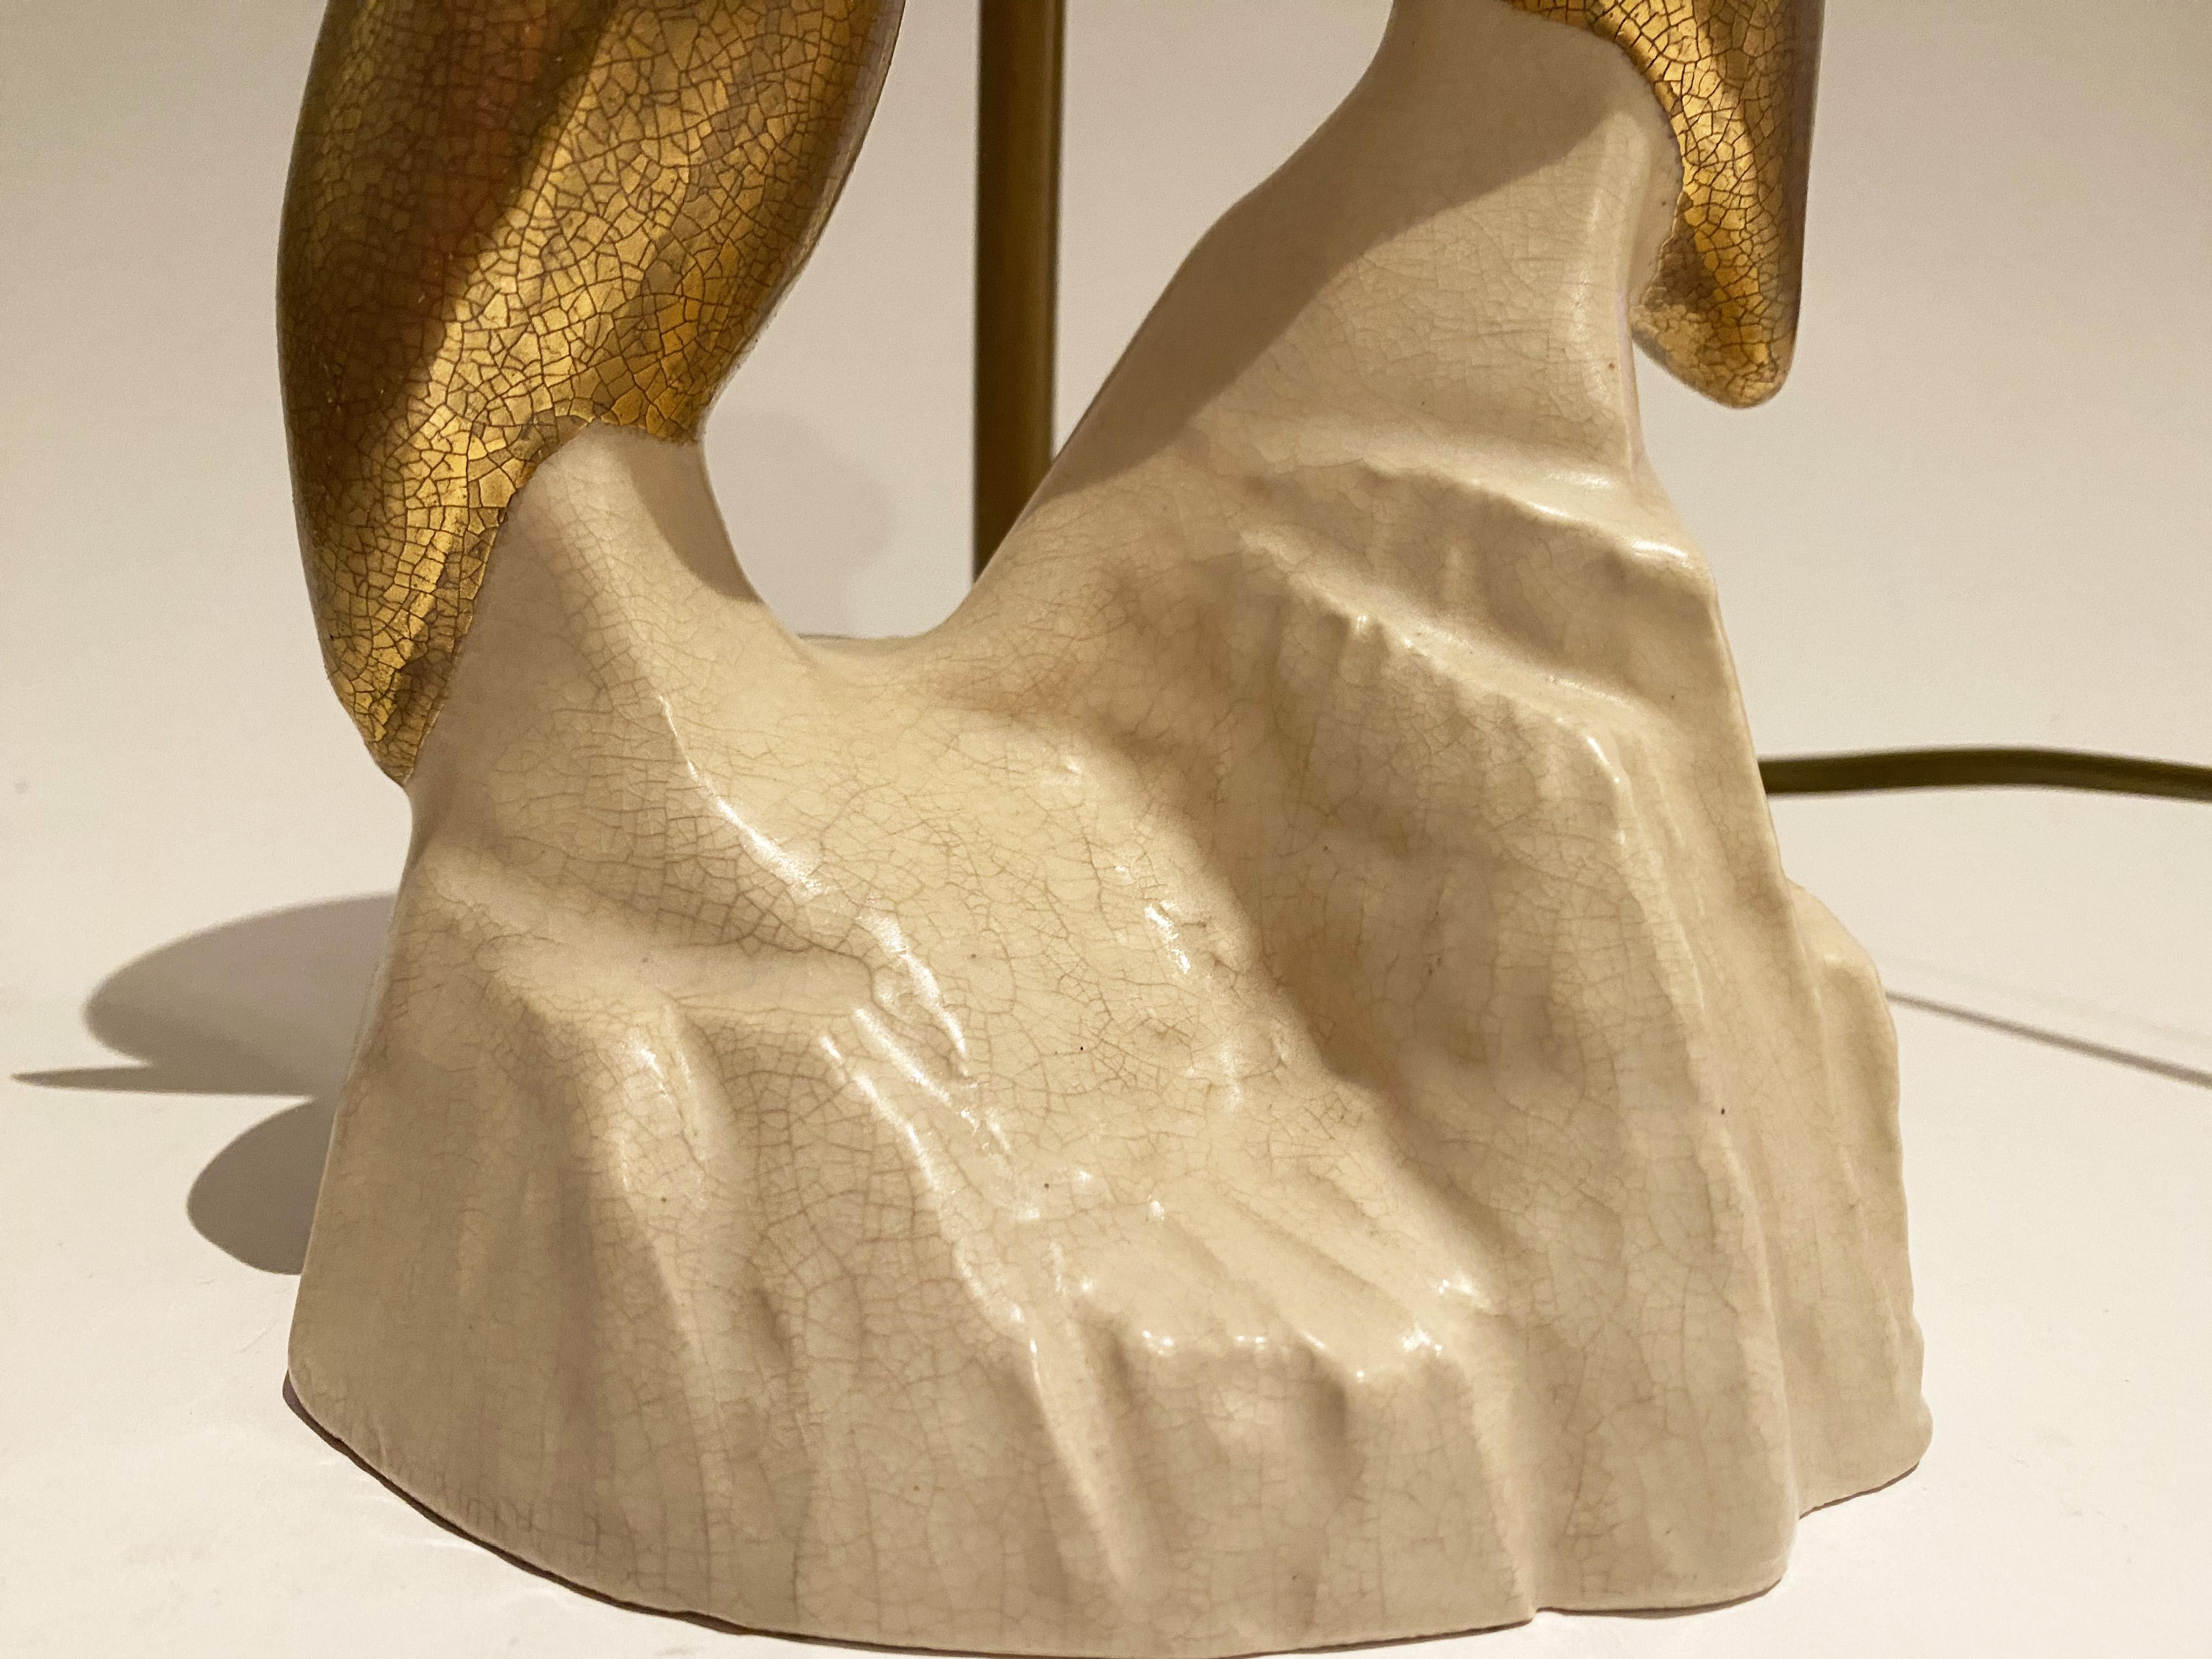 Gilded cracked ceramic birds (penguins) lamp, art deco style, 1970s. 1